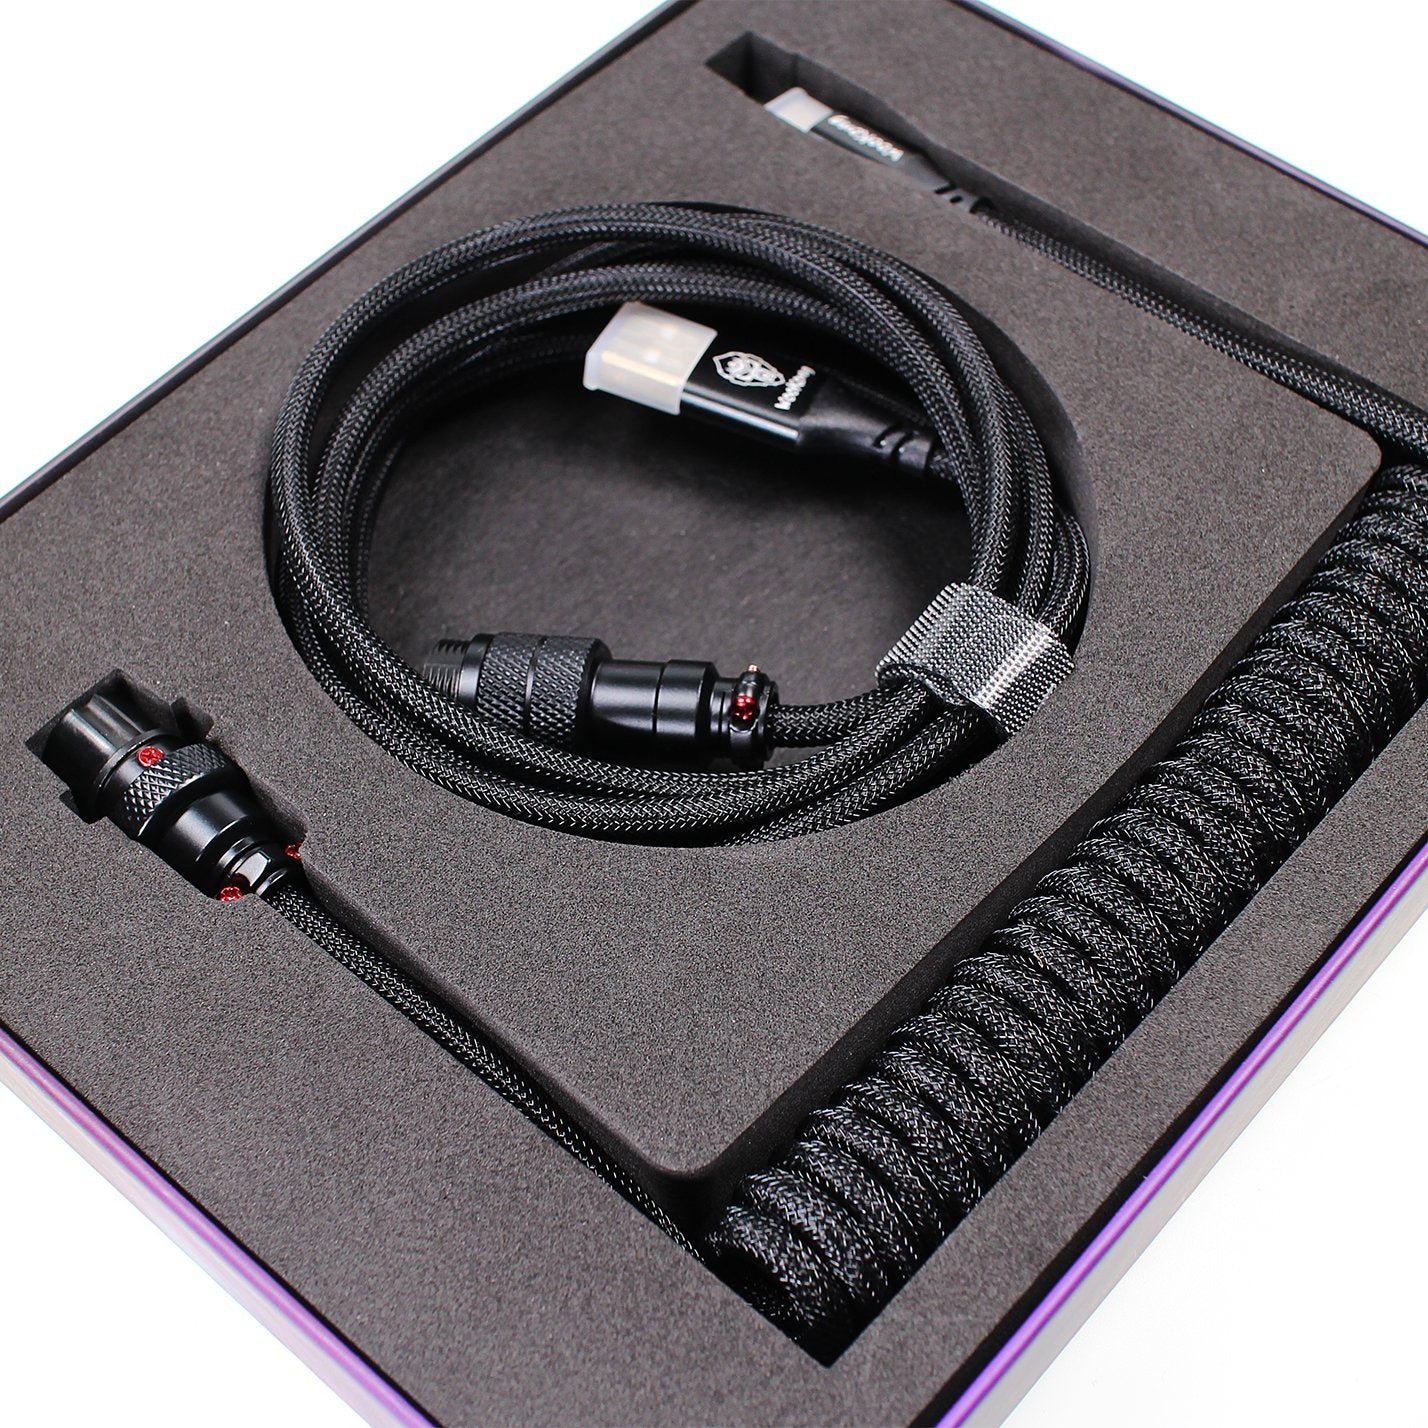 Wookong Black Aviator Cables-Addice Inc